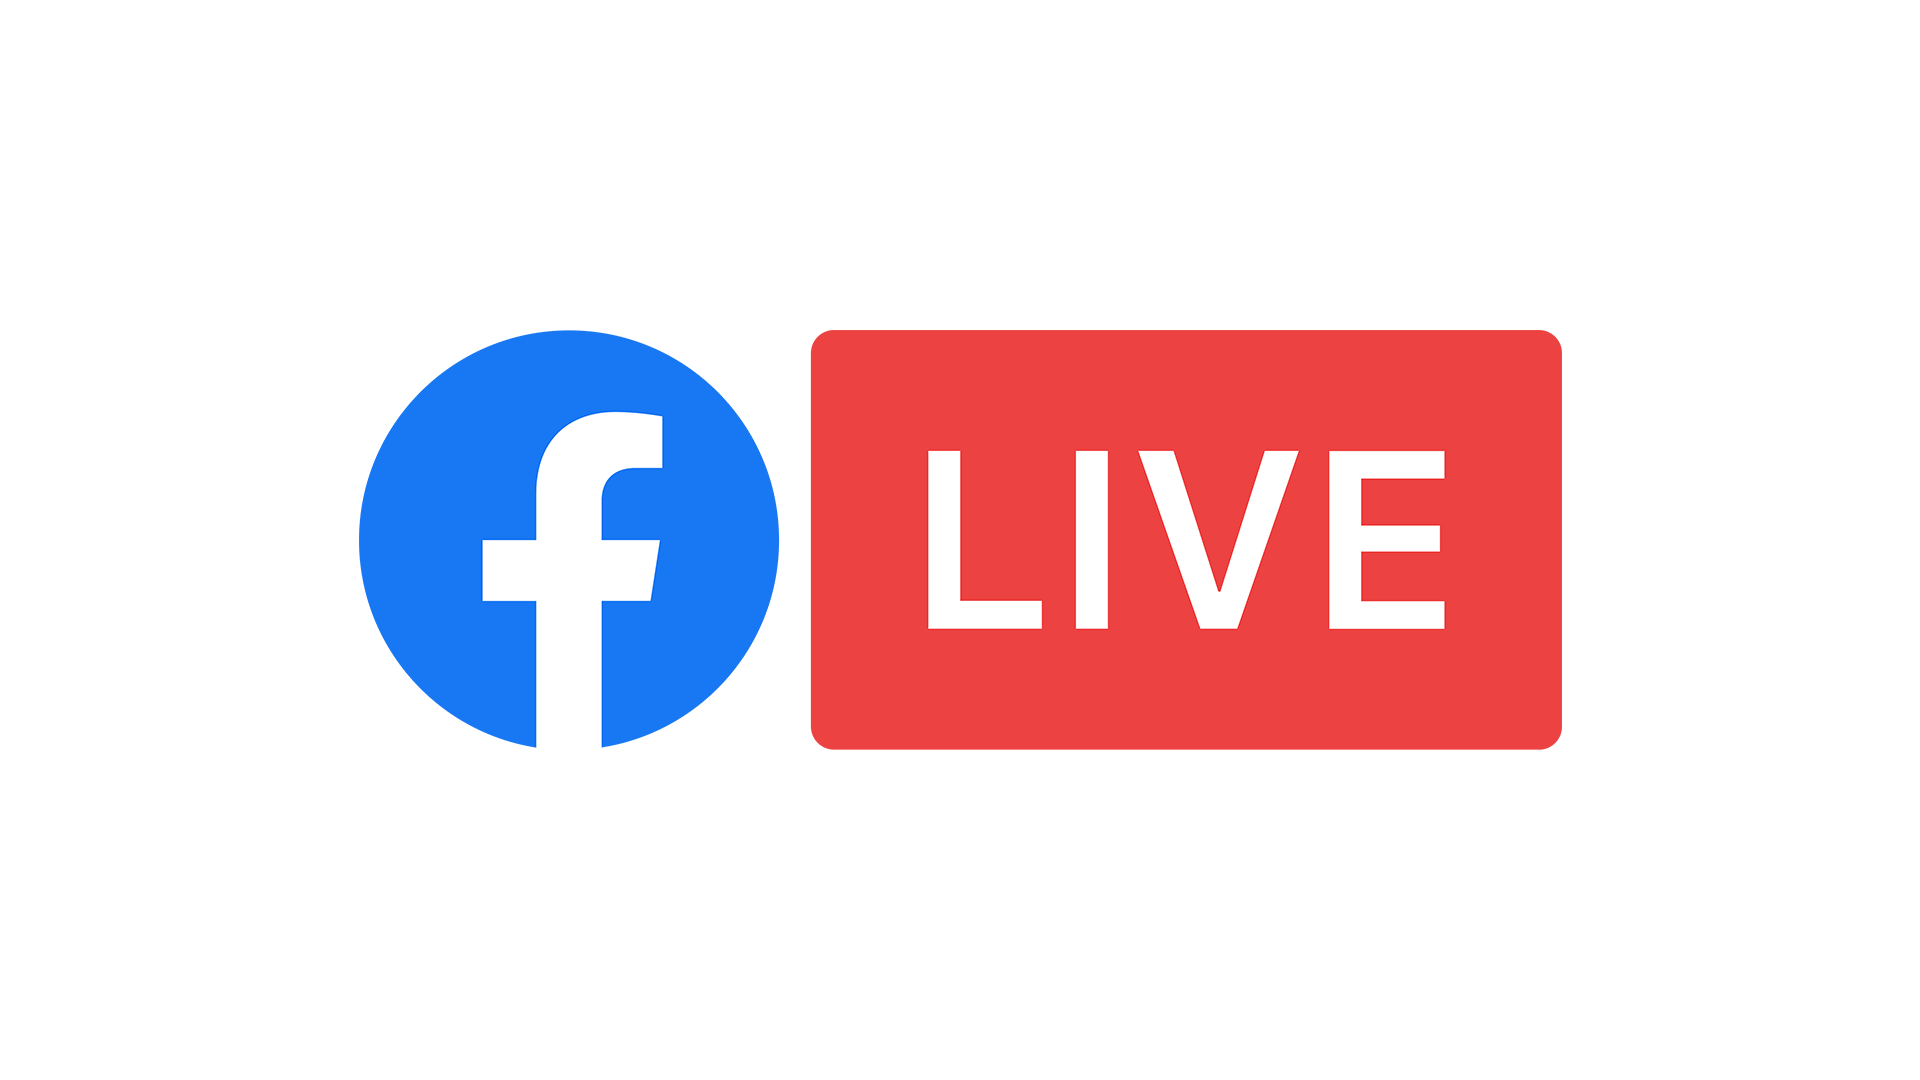 Facebook live logo